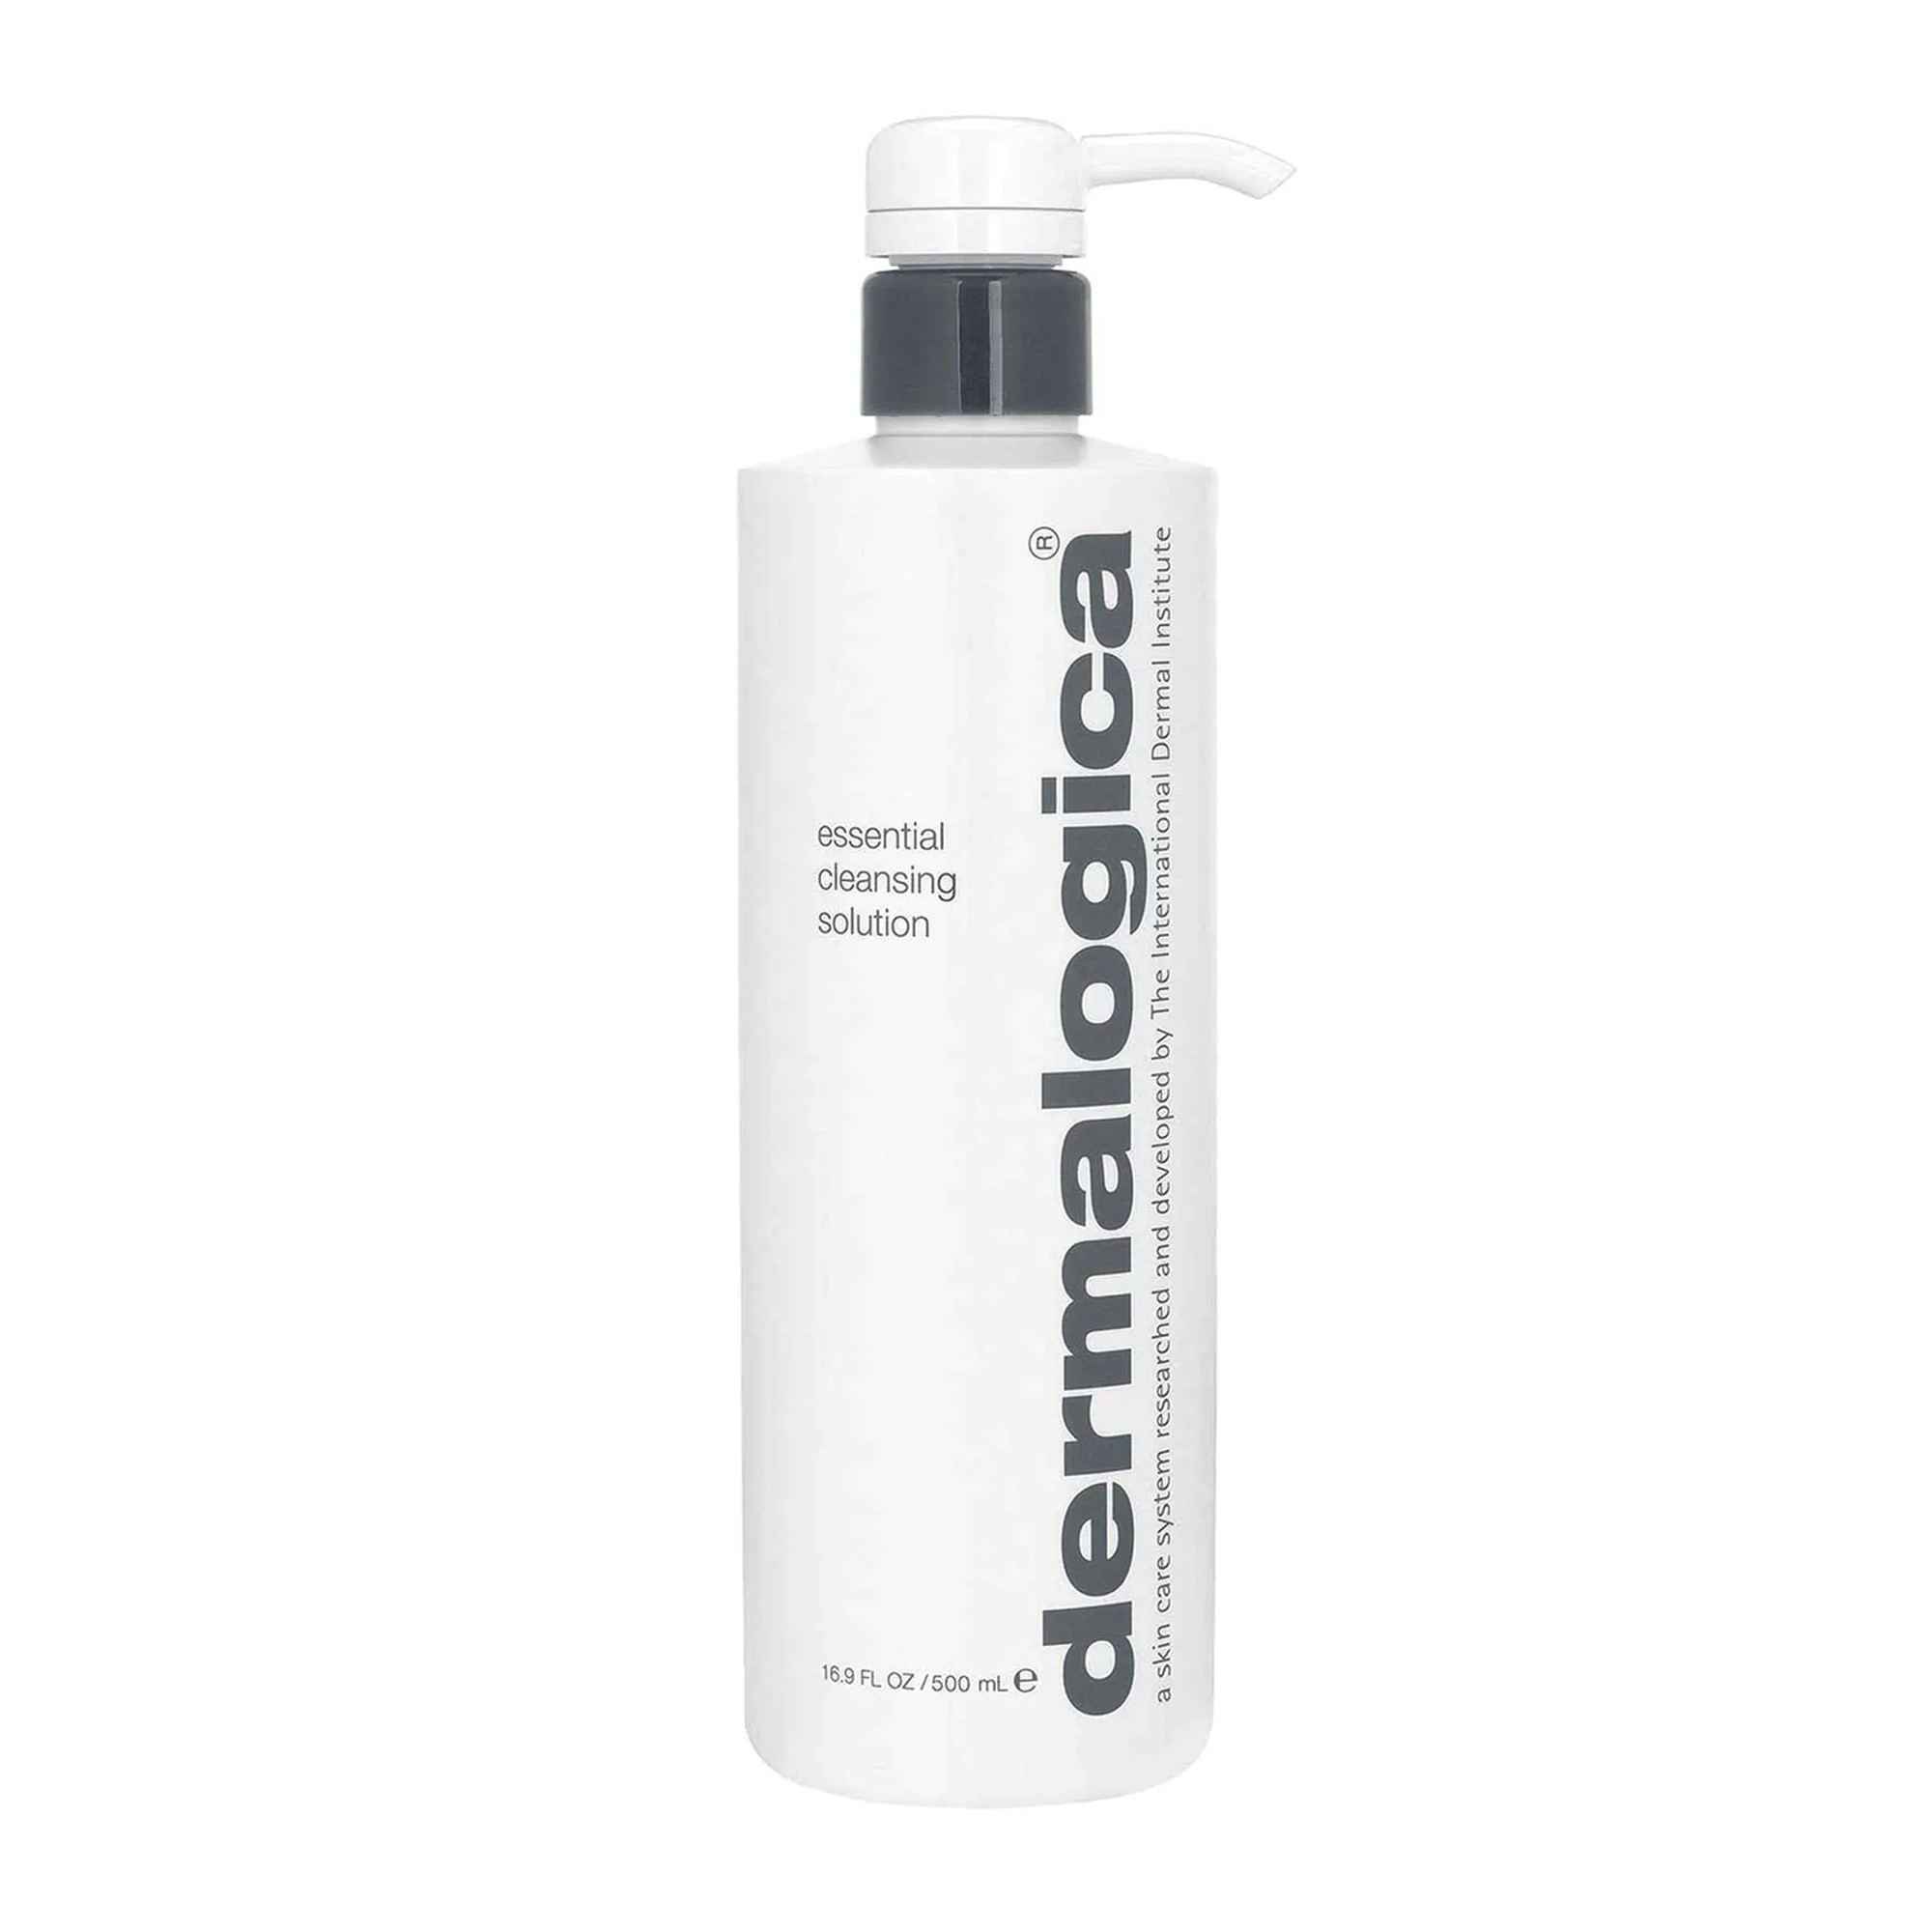 Dermalogica Essential Cleansing Solution Есенціальний очисник для сухої шкіри